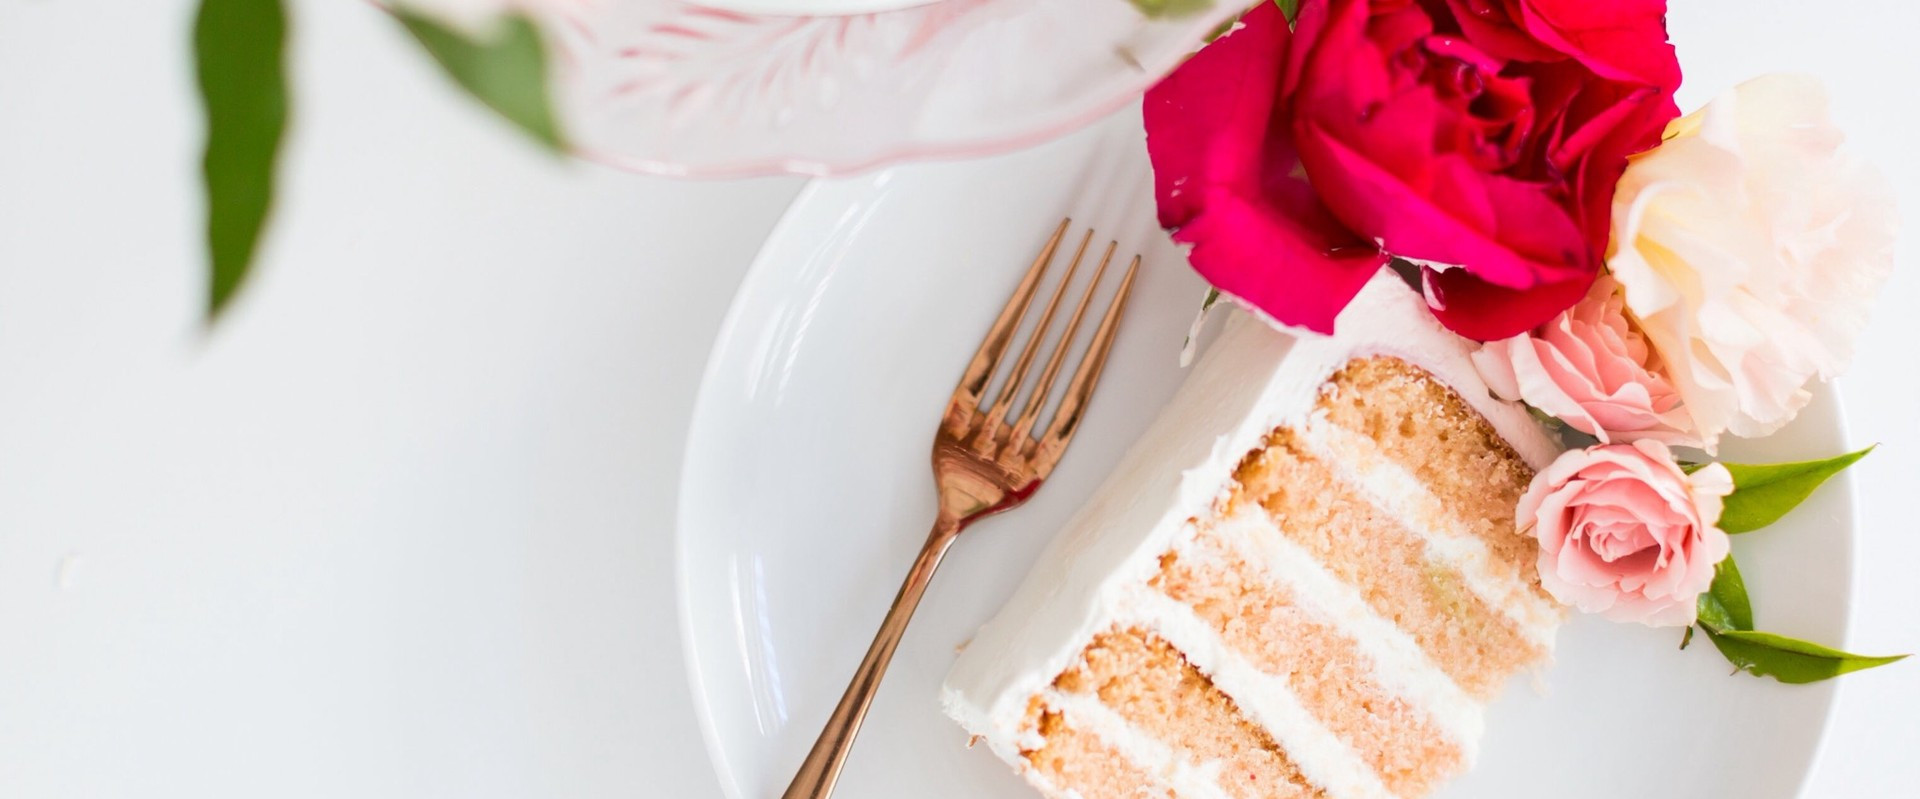 Unique Wedding Cake Flavors
 Unique Wedding Cake Flavors with Růže Cake House